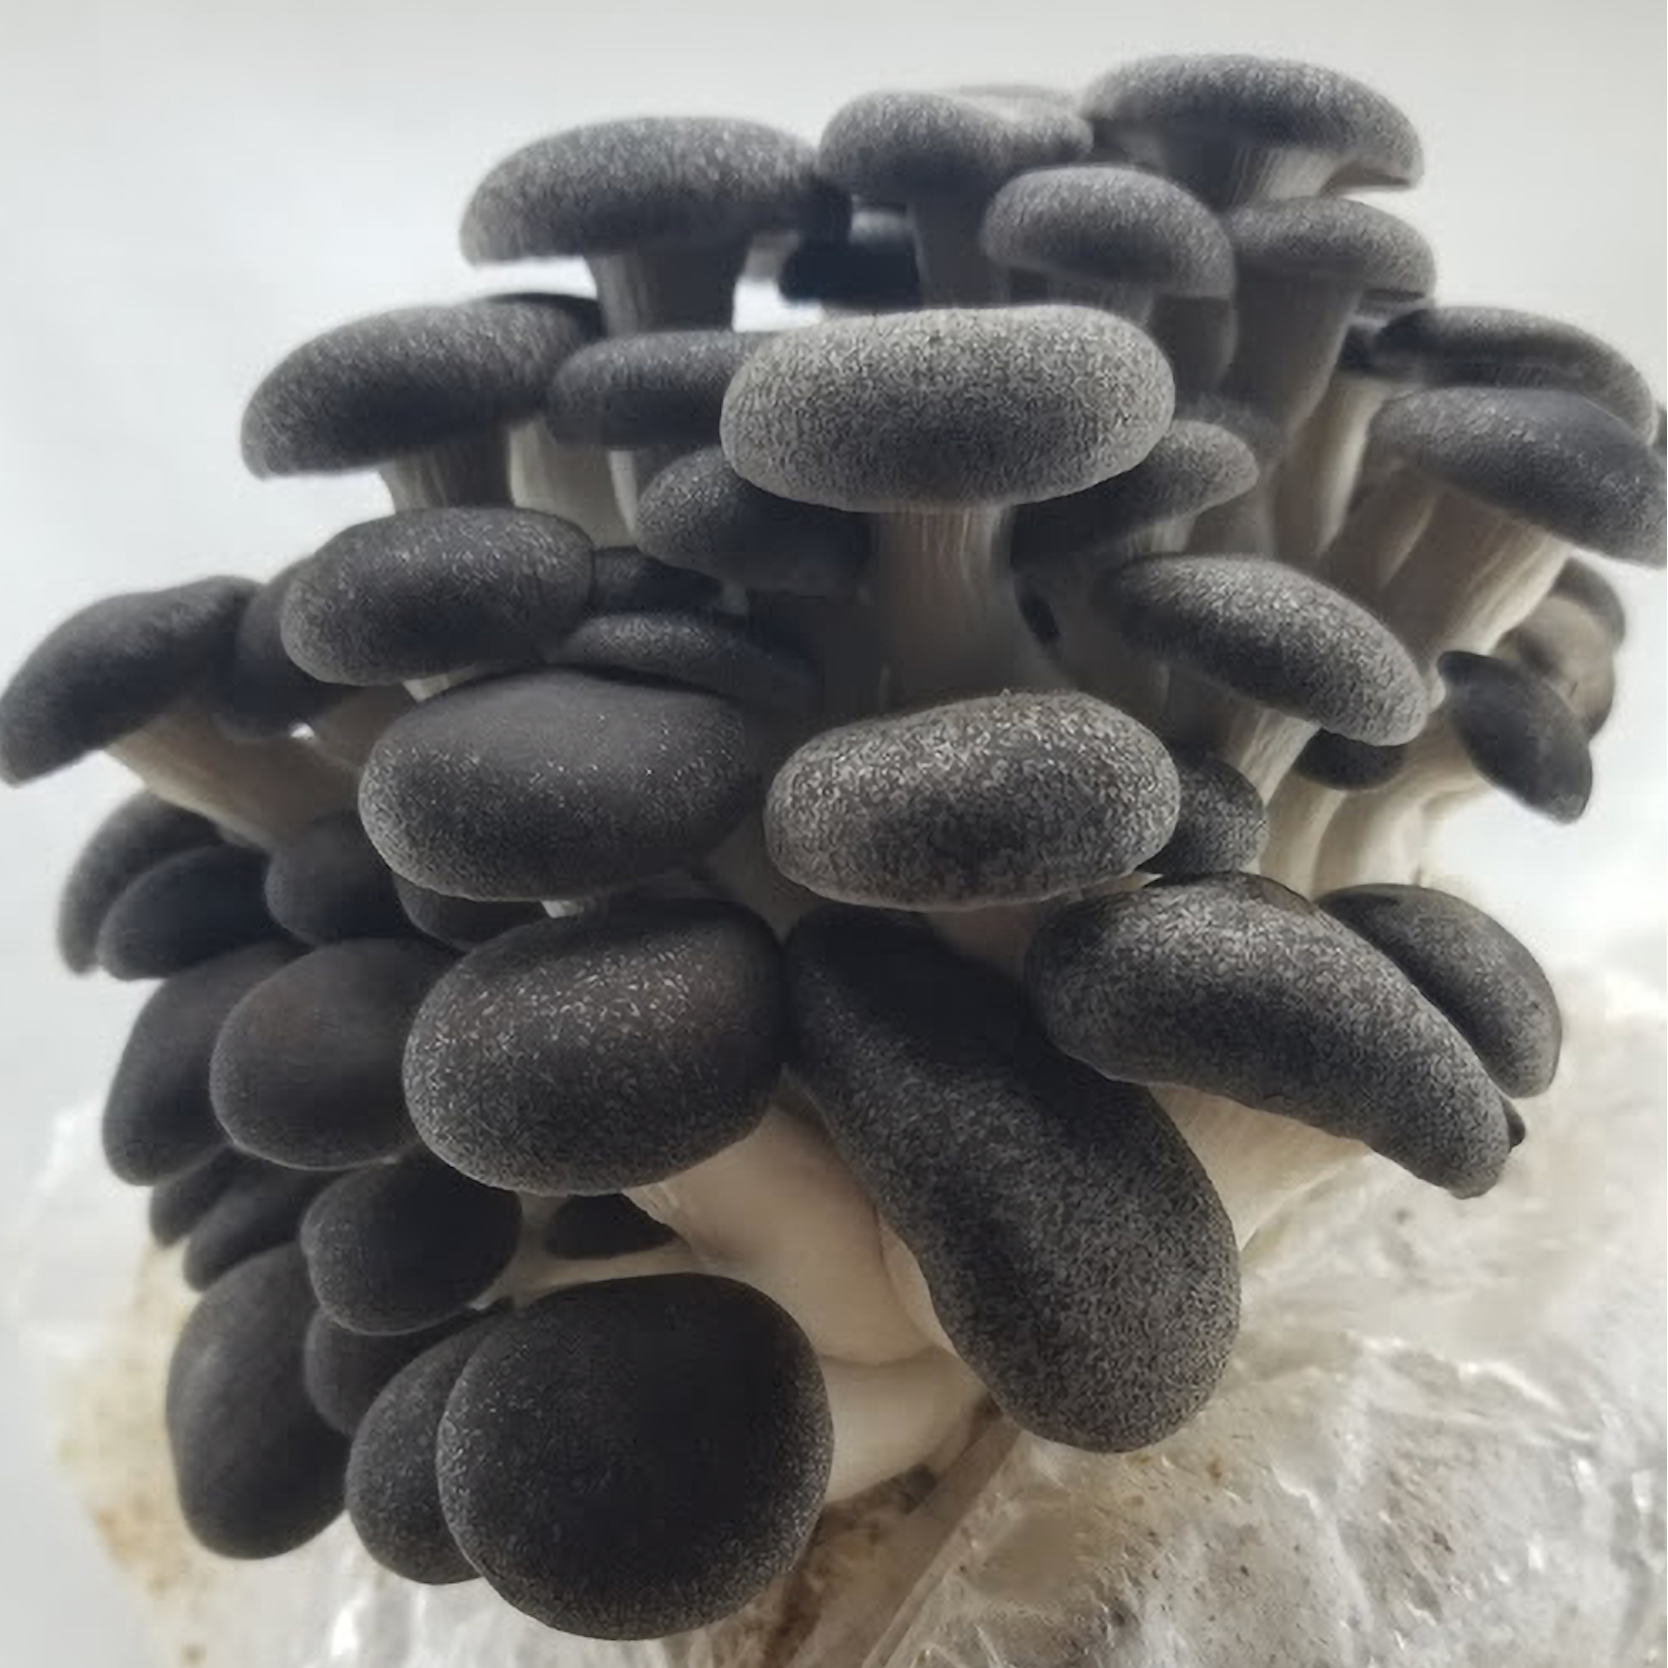 Mother Mushrooms